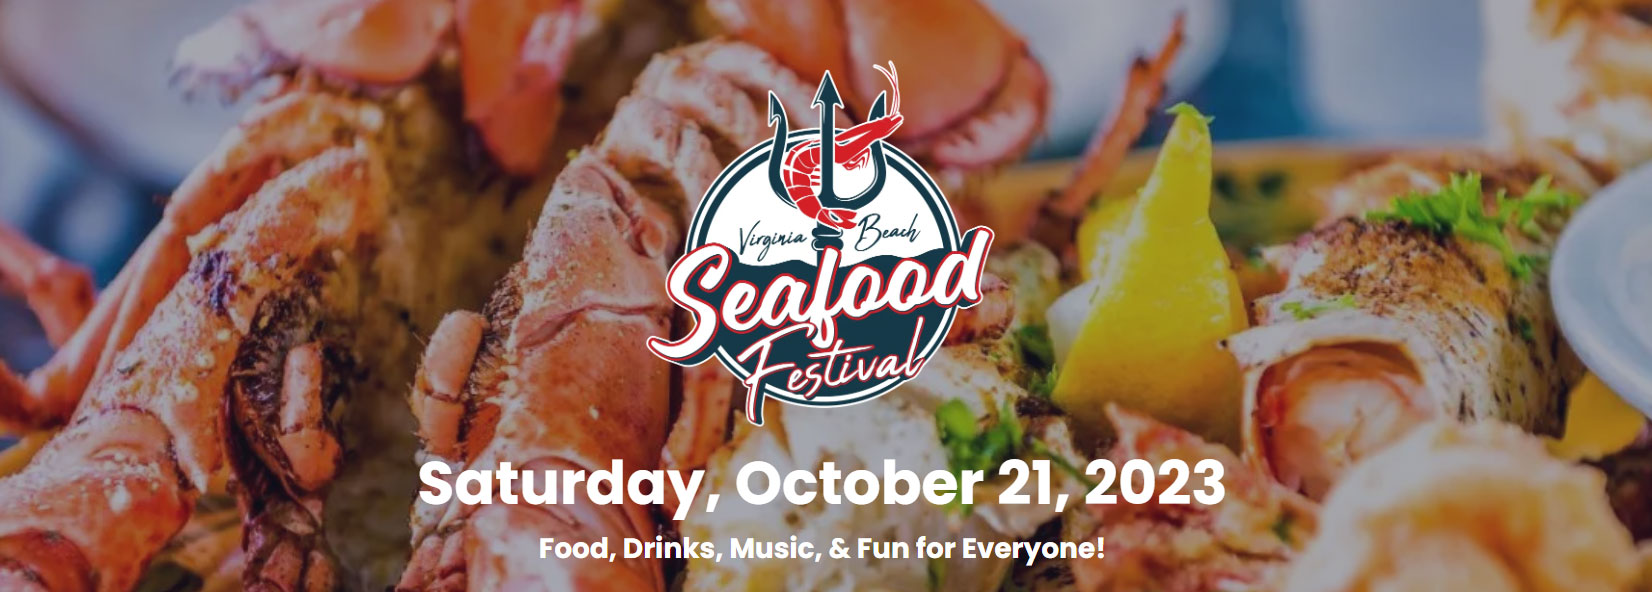 2nd Annual Virginia Beach Seafood Festival WNIS